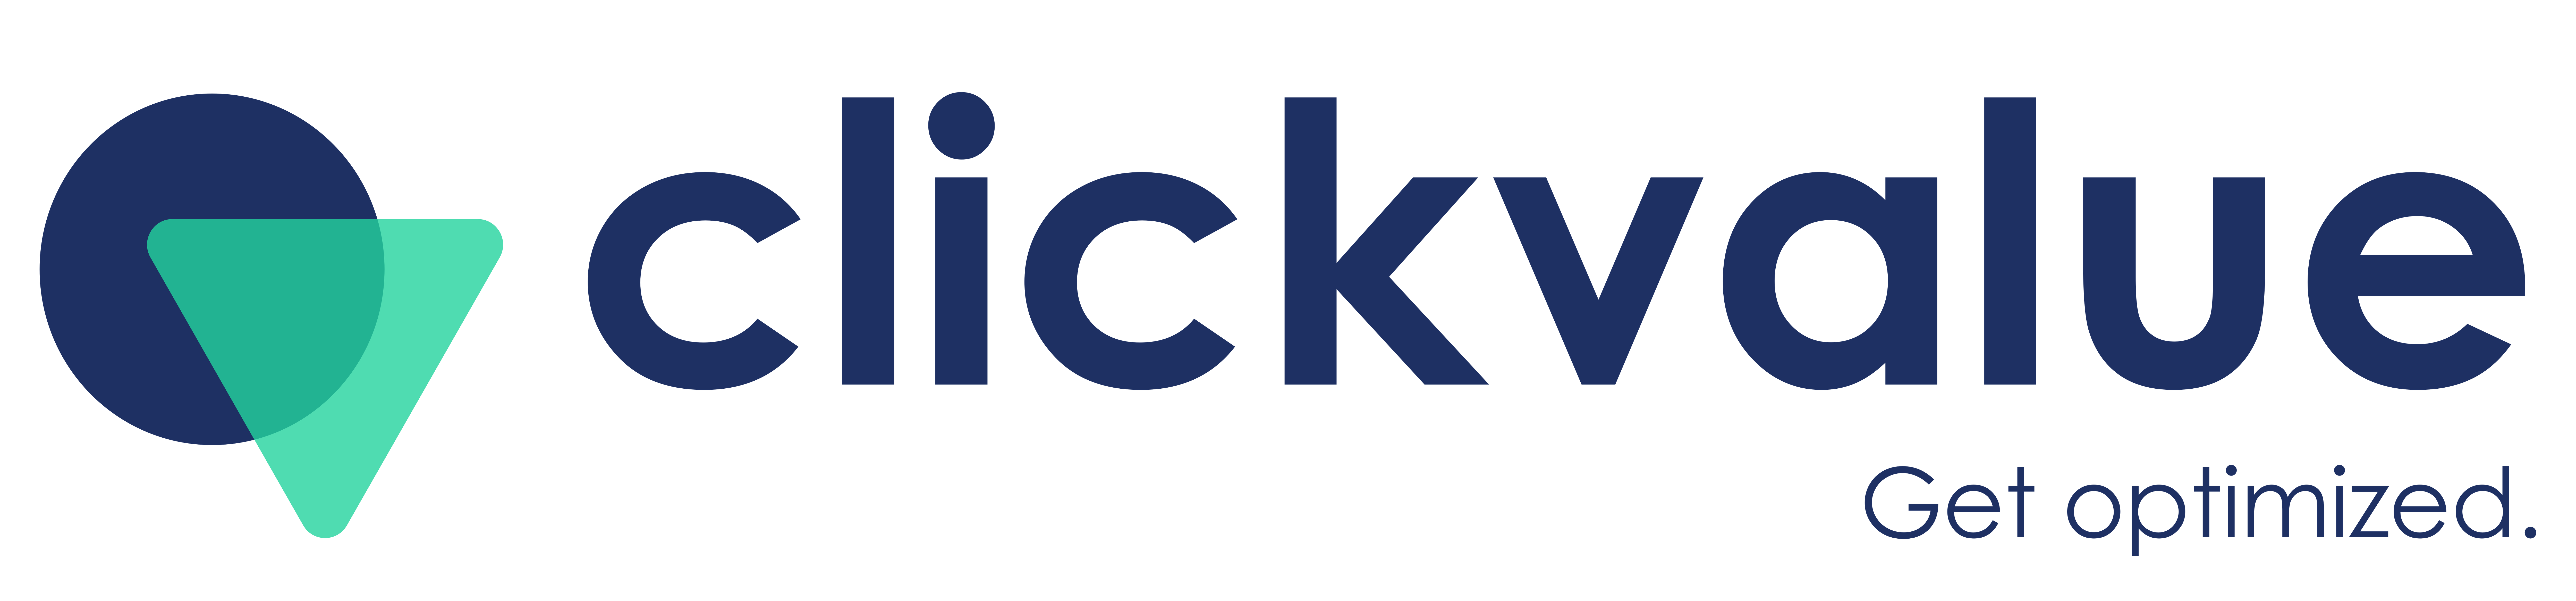 Clickvalue logo